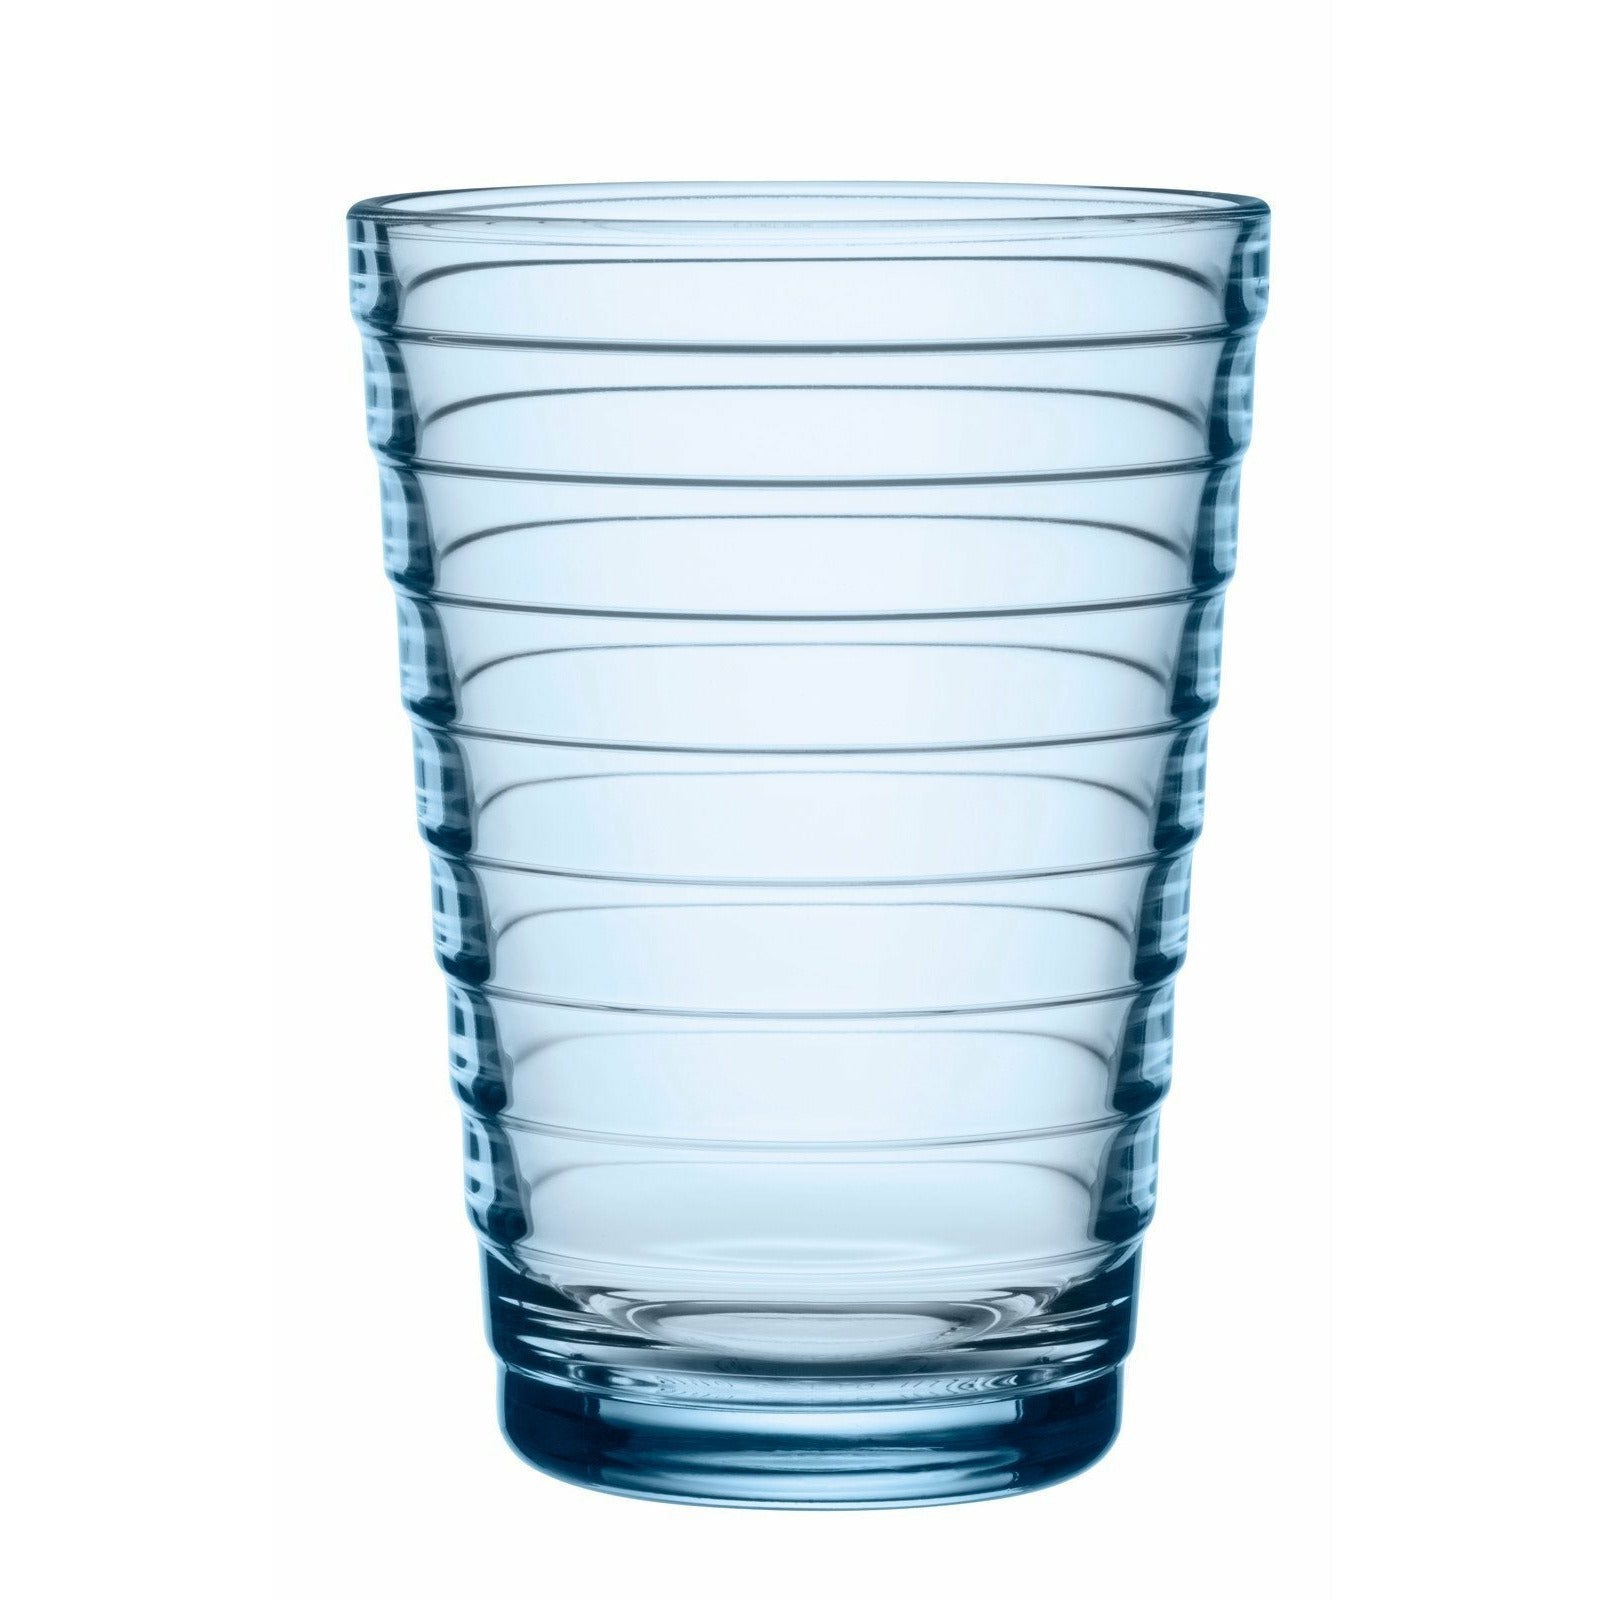 Iittala Aino Aalto Drinking Glass Aqua 33cl, 2pcs.